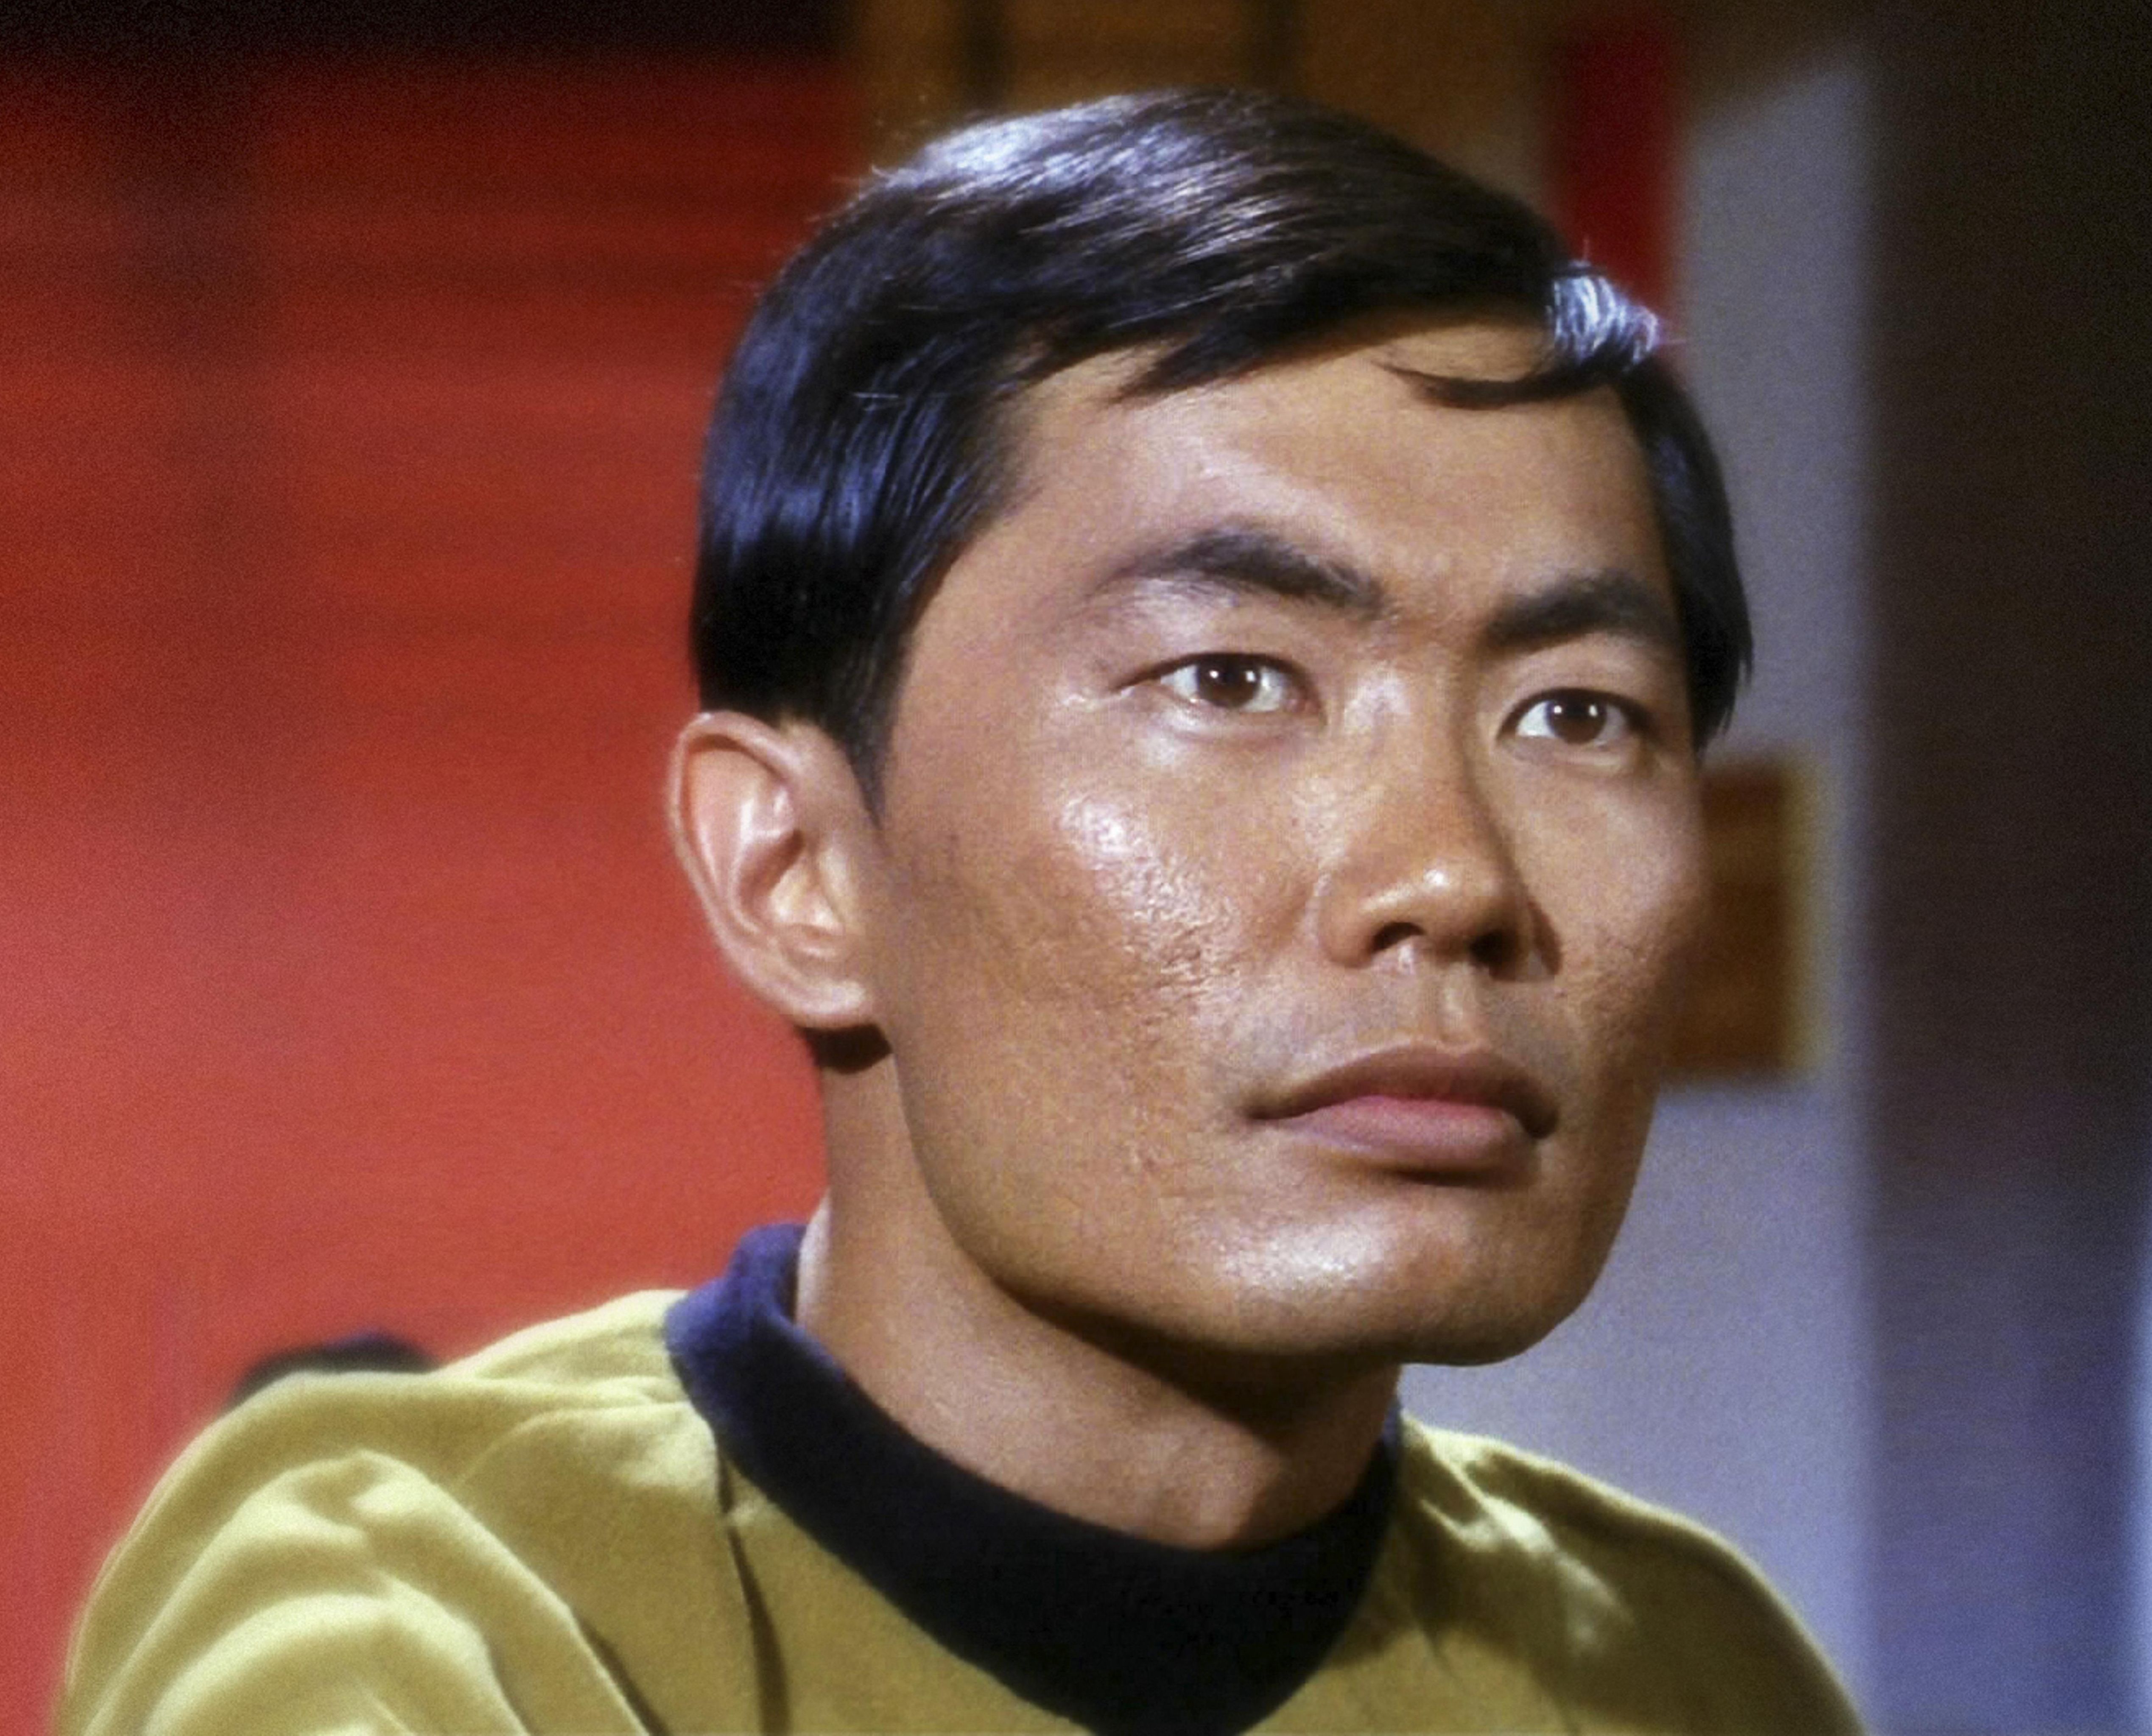 George Takei as Sulu